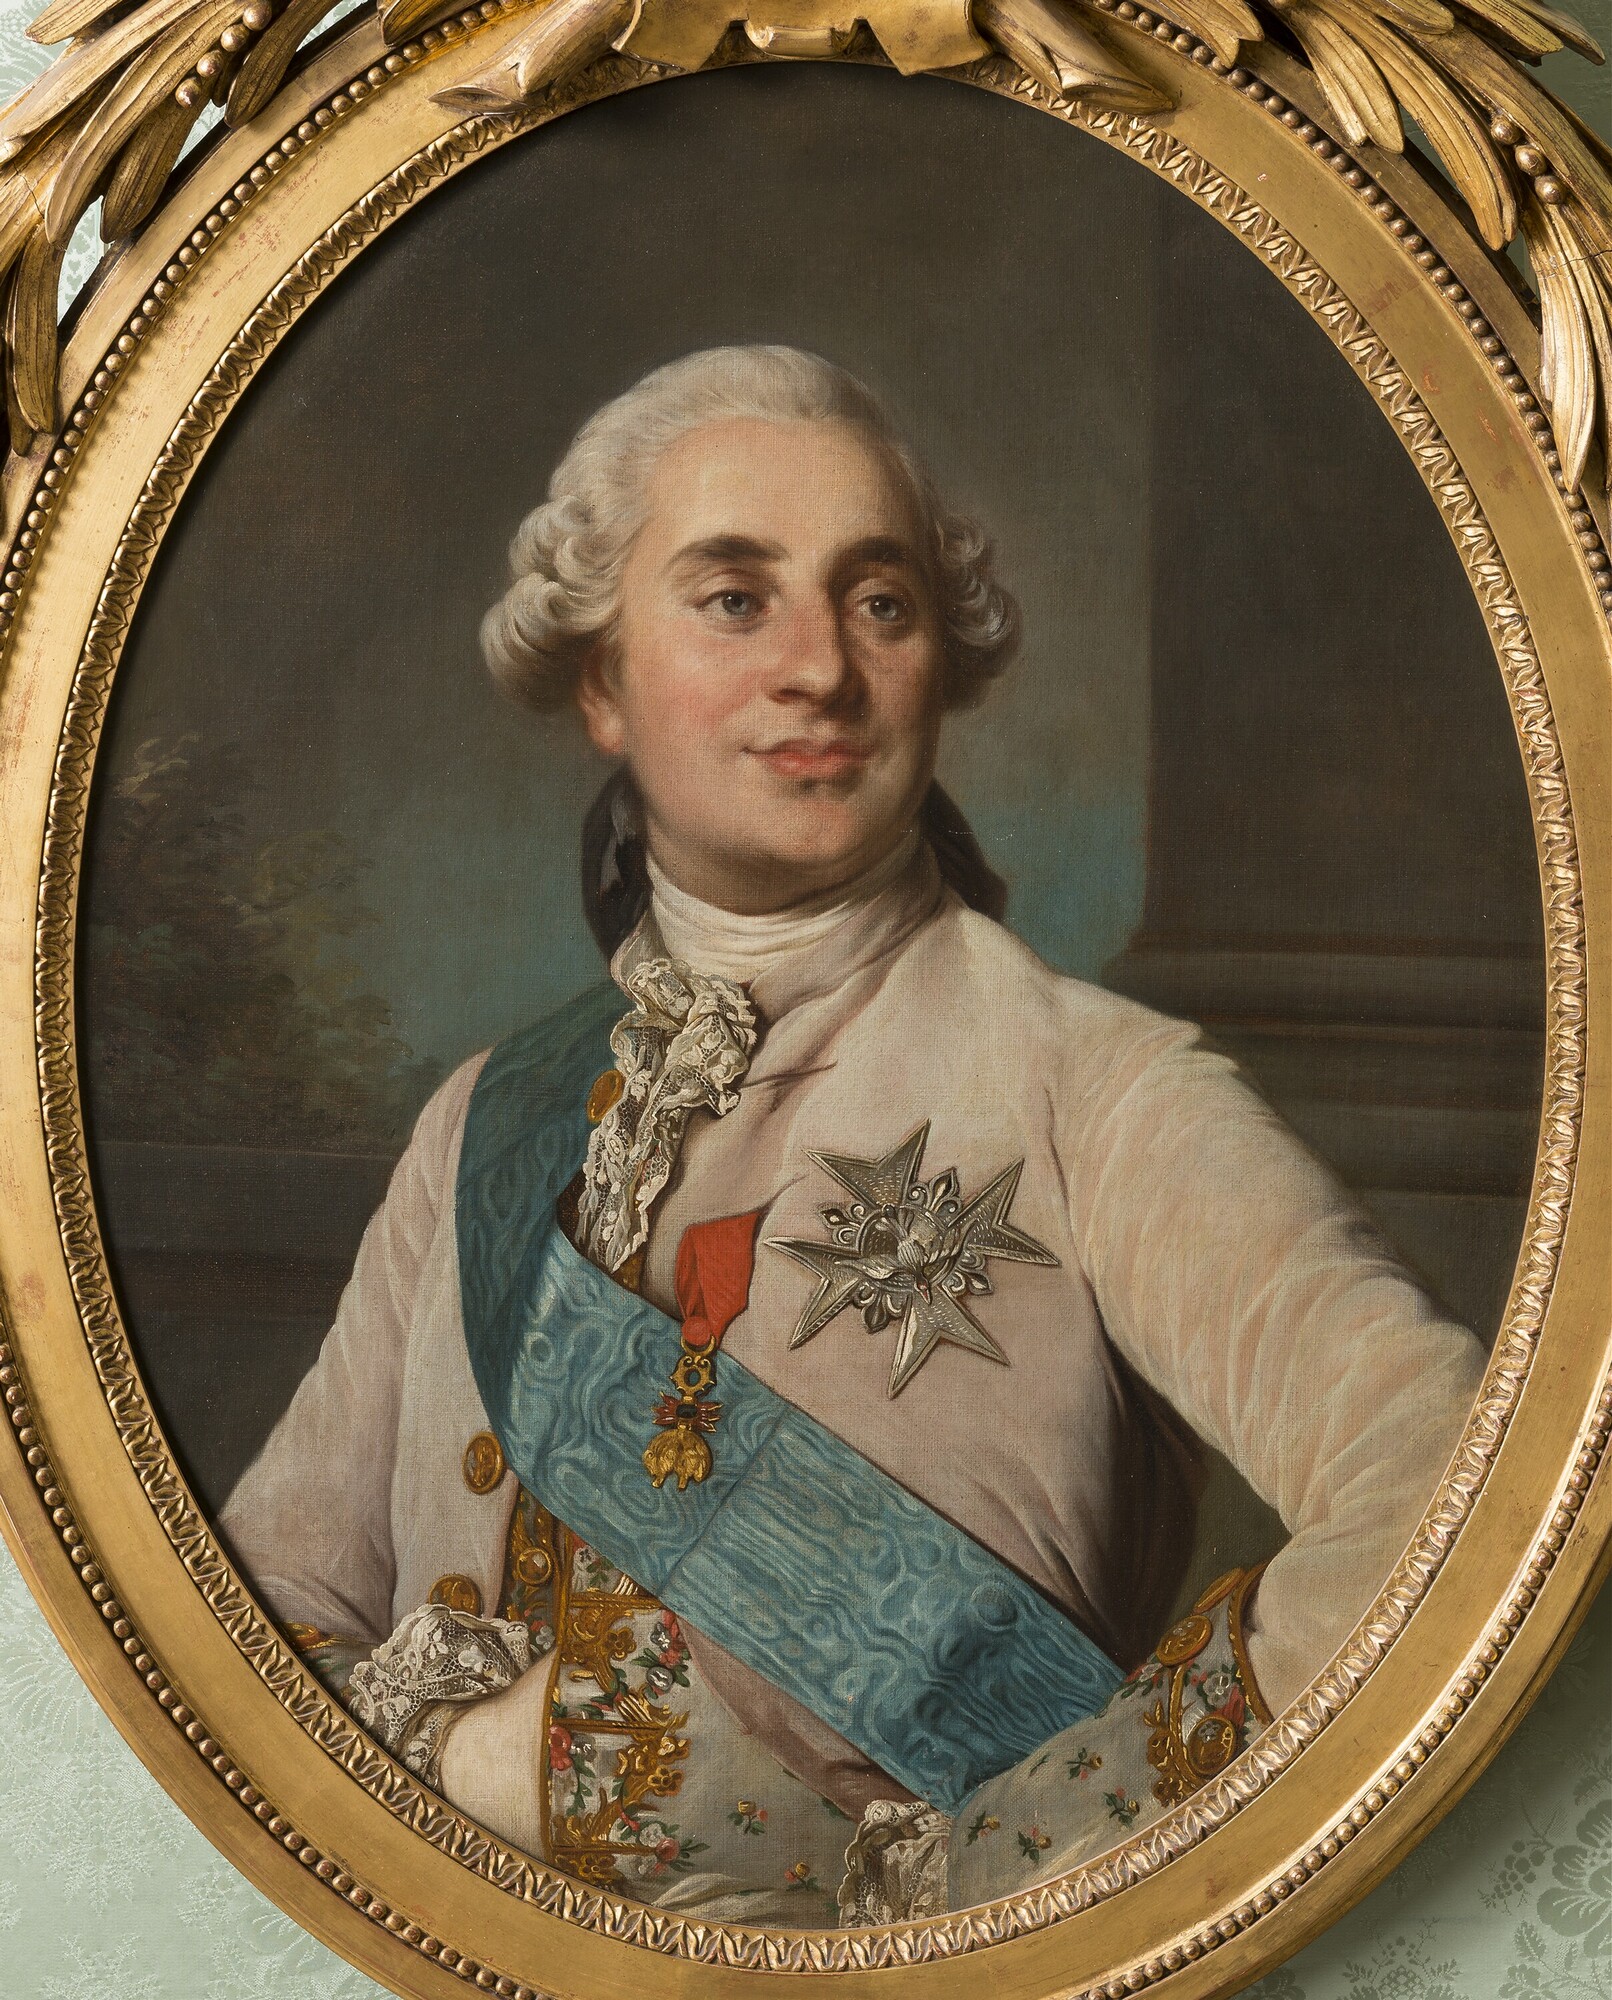 Conférence : Louis XVI, un grand roi méconnu